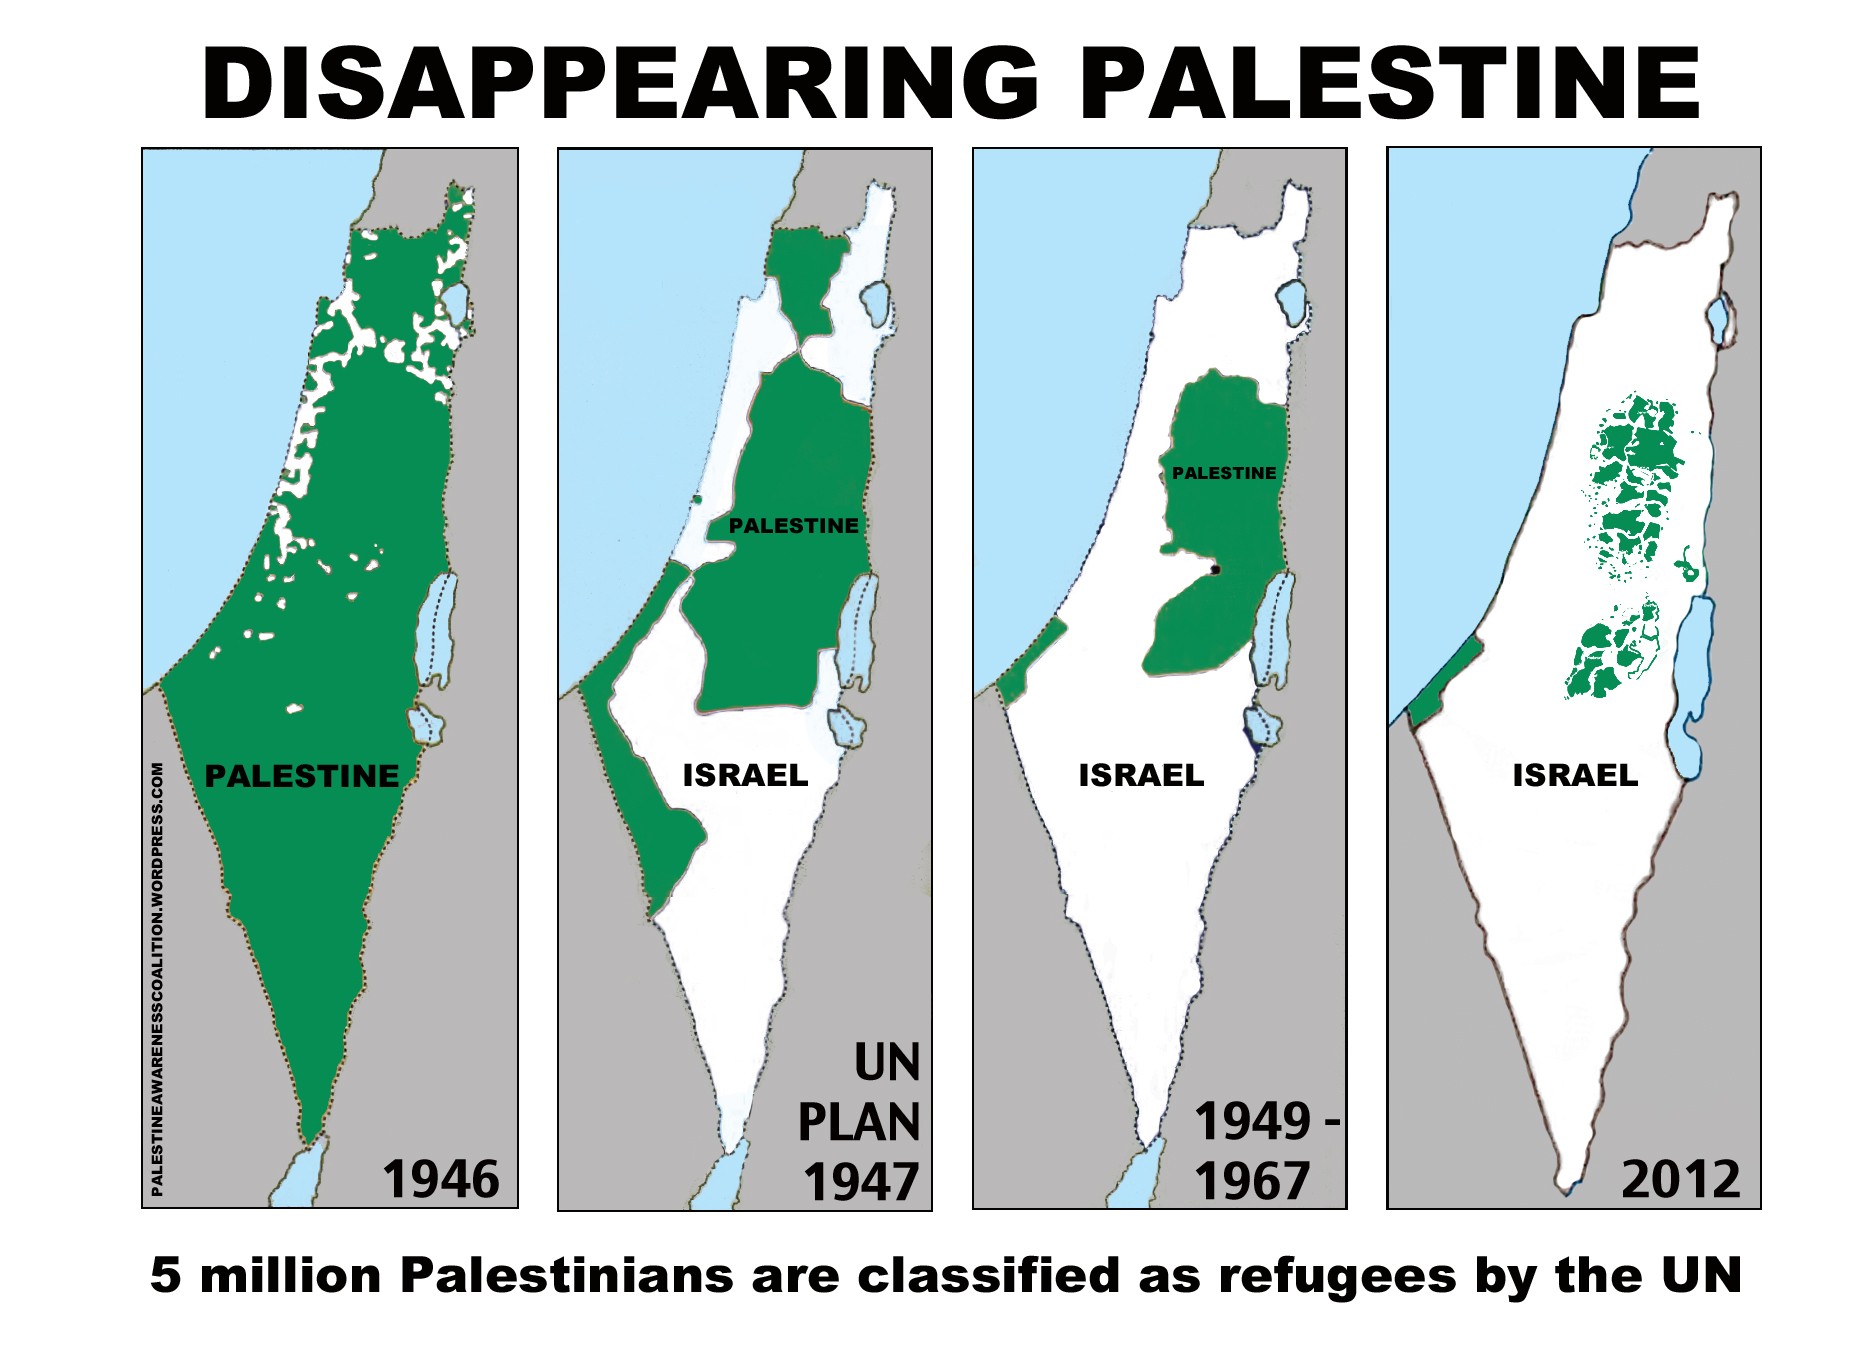 palestinianland11